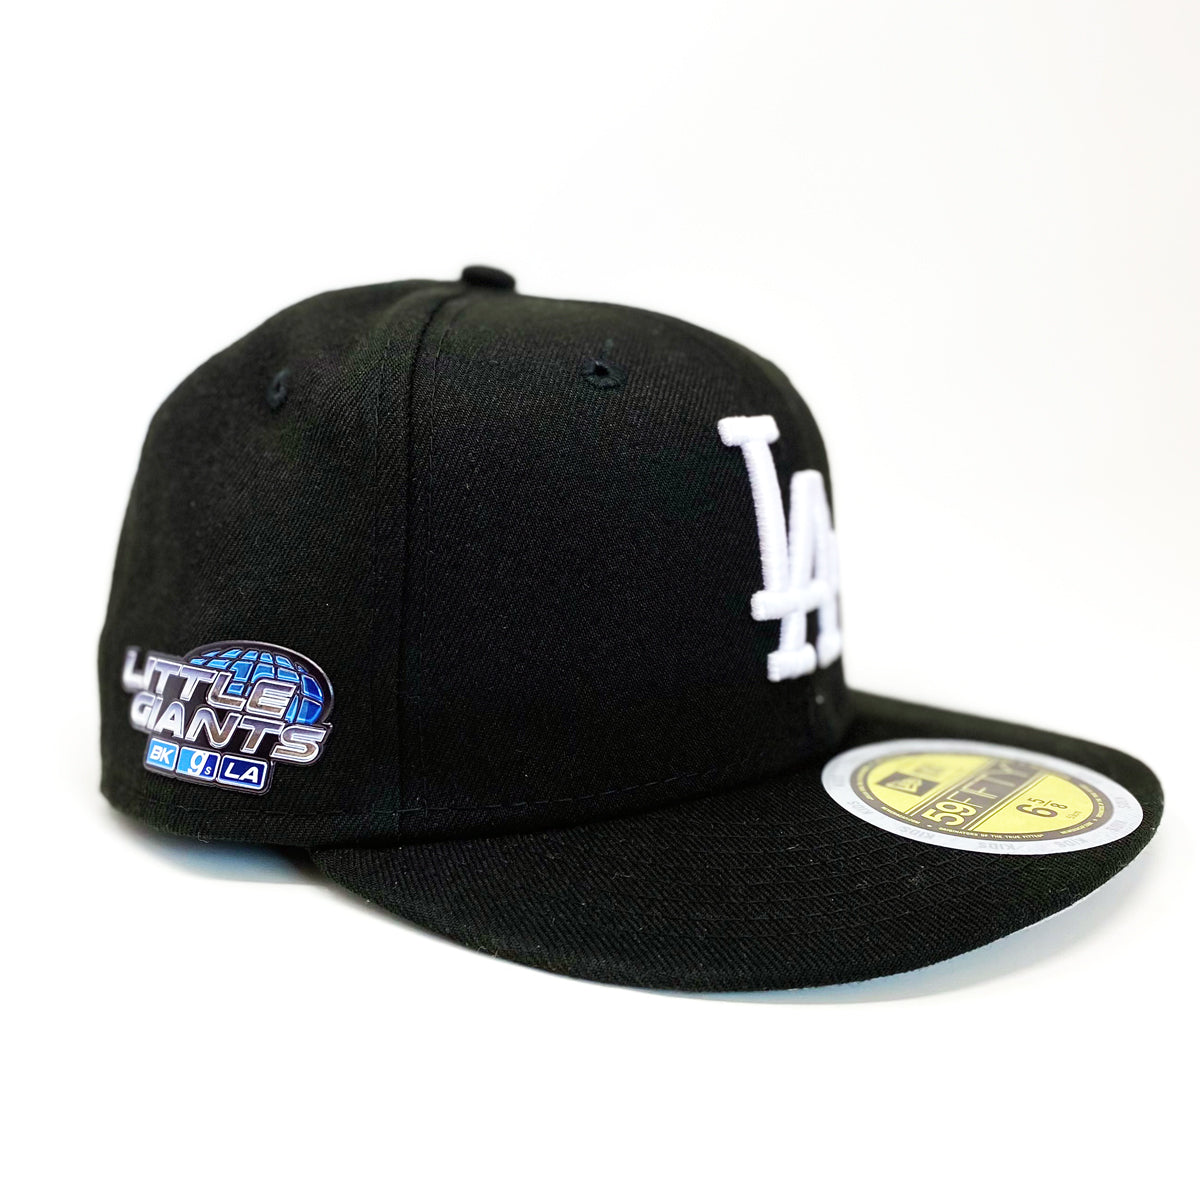 Dodgers Custom Black Fitted w/Gradient Side Emblem